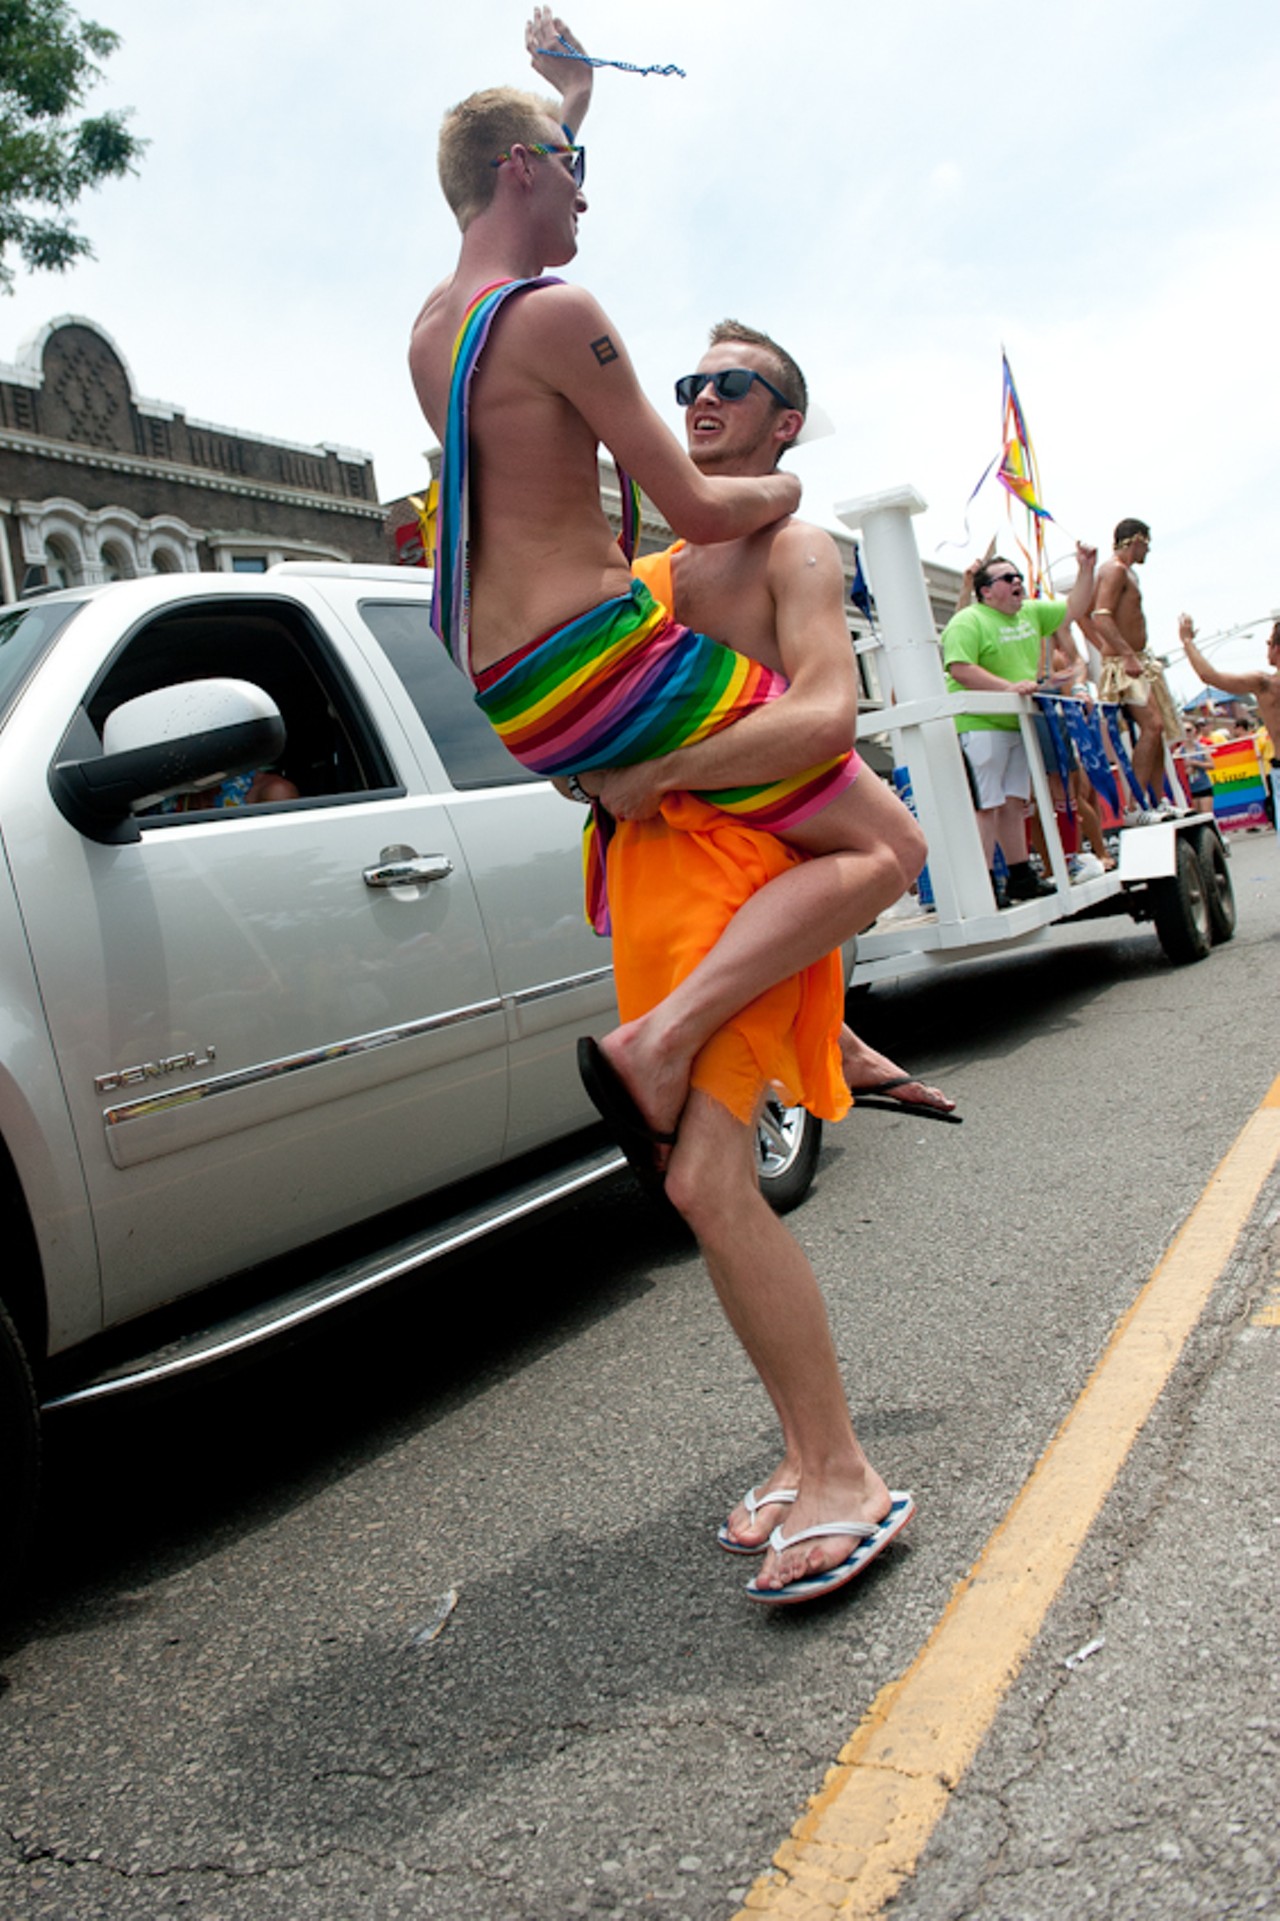 Pridefest 2012 - St. Louis, Part 3 (NSFW)